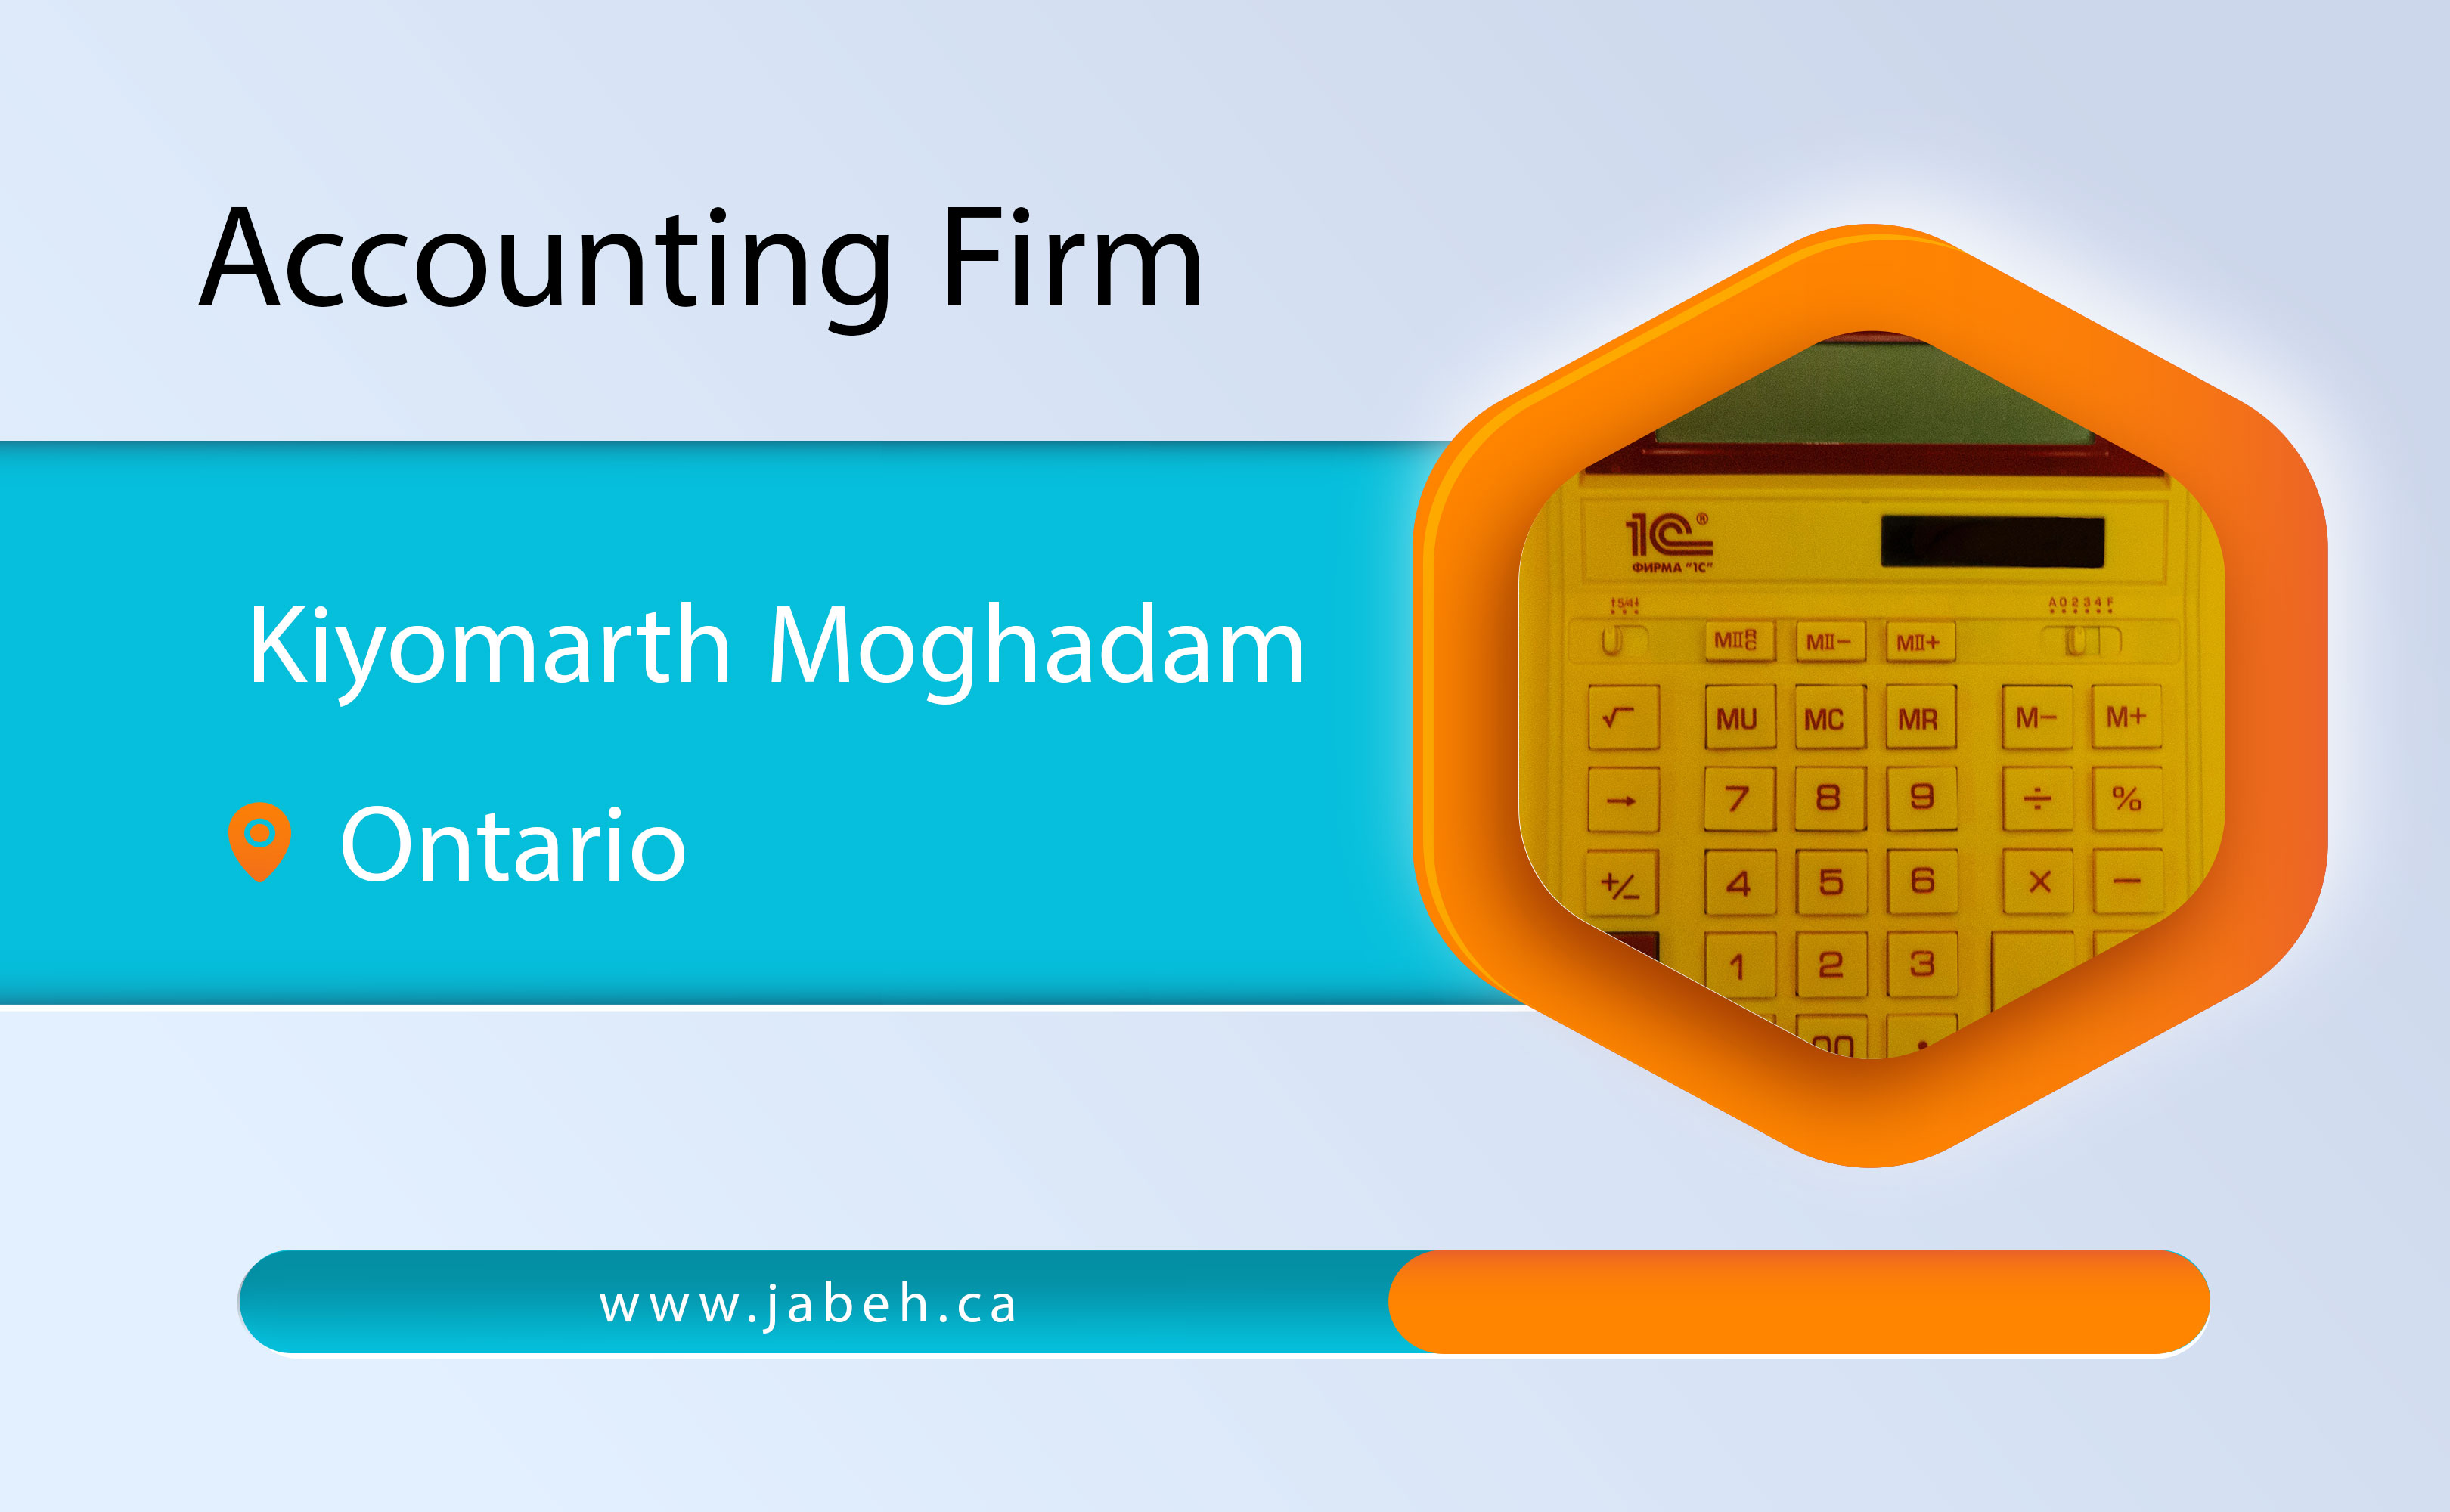 QMerth Moghadam Accounting Firm in Ontario